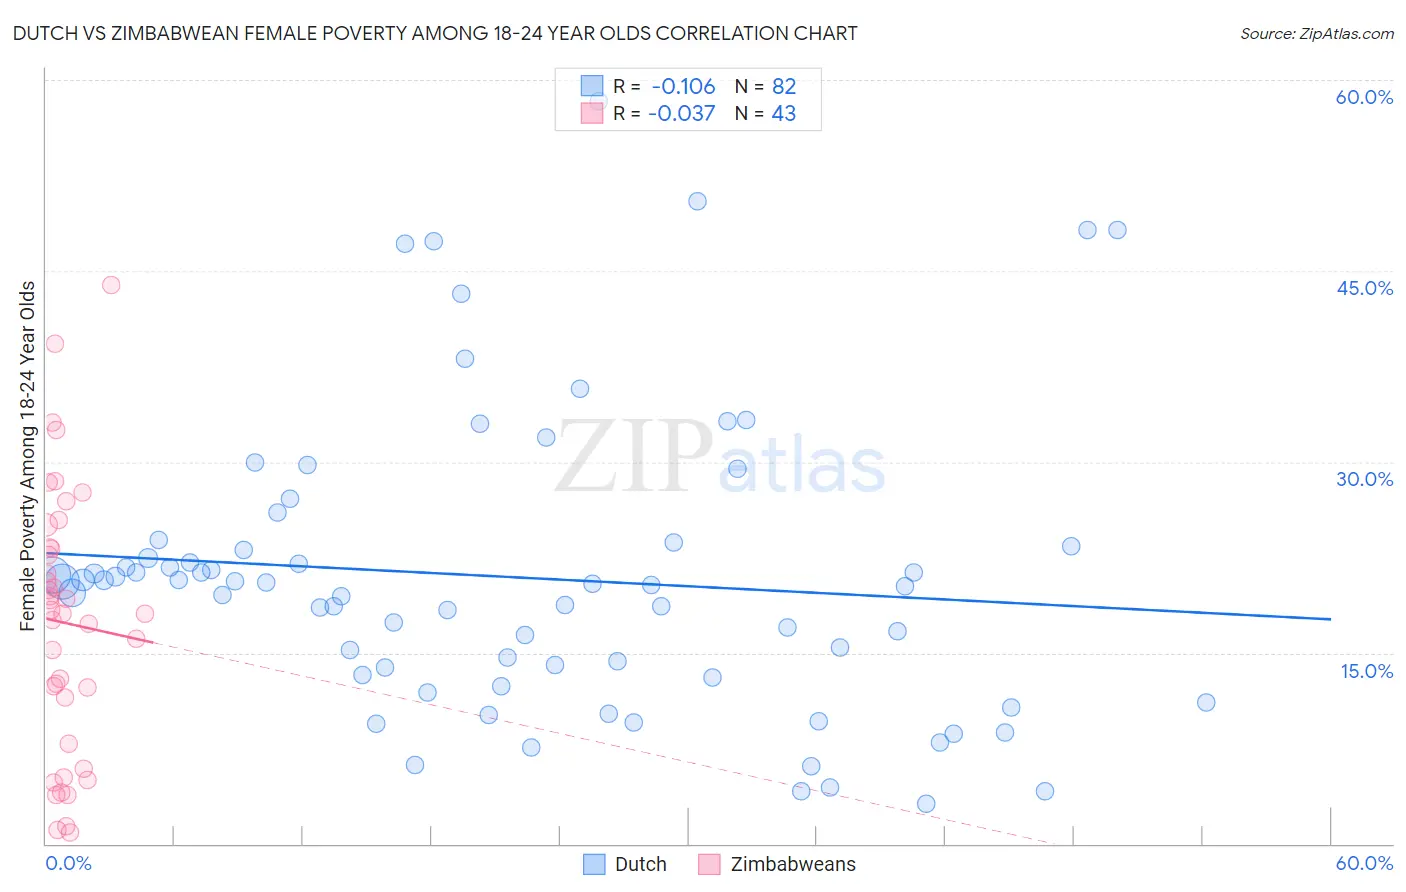 Dutch vs Zimbabwean Female Poverty Among 18-24 Year Olds